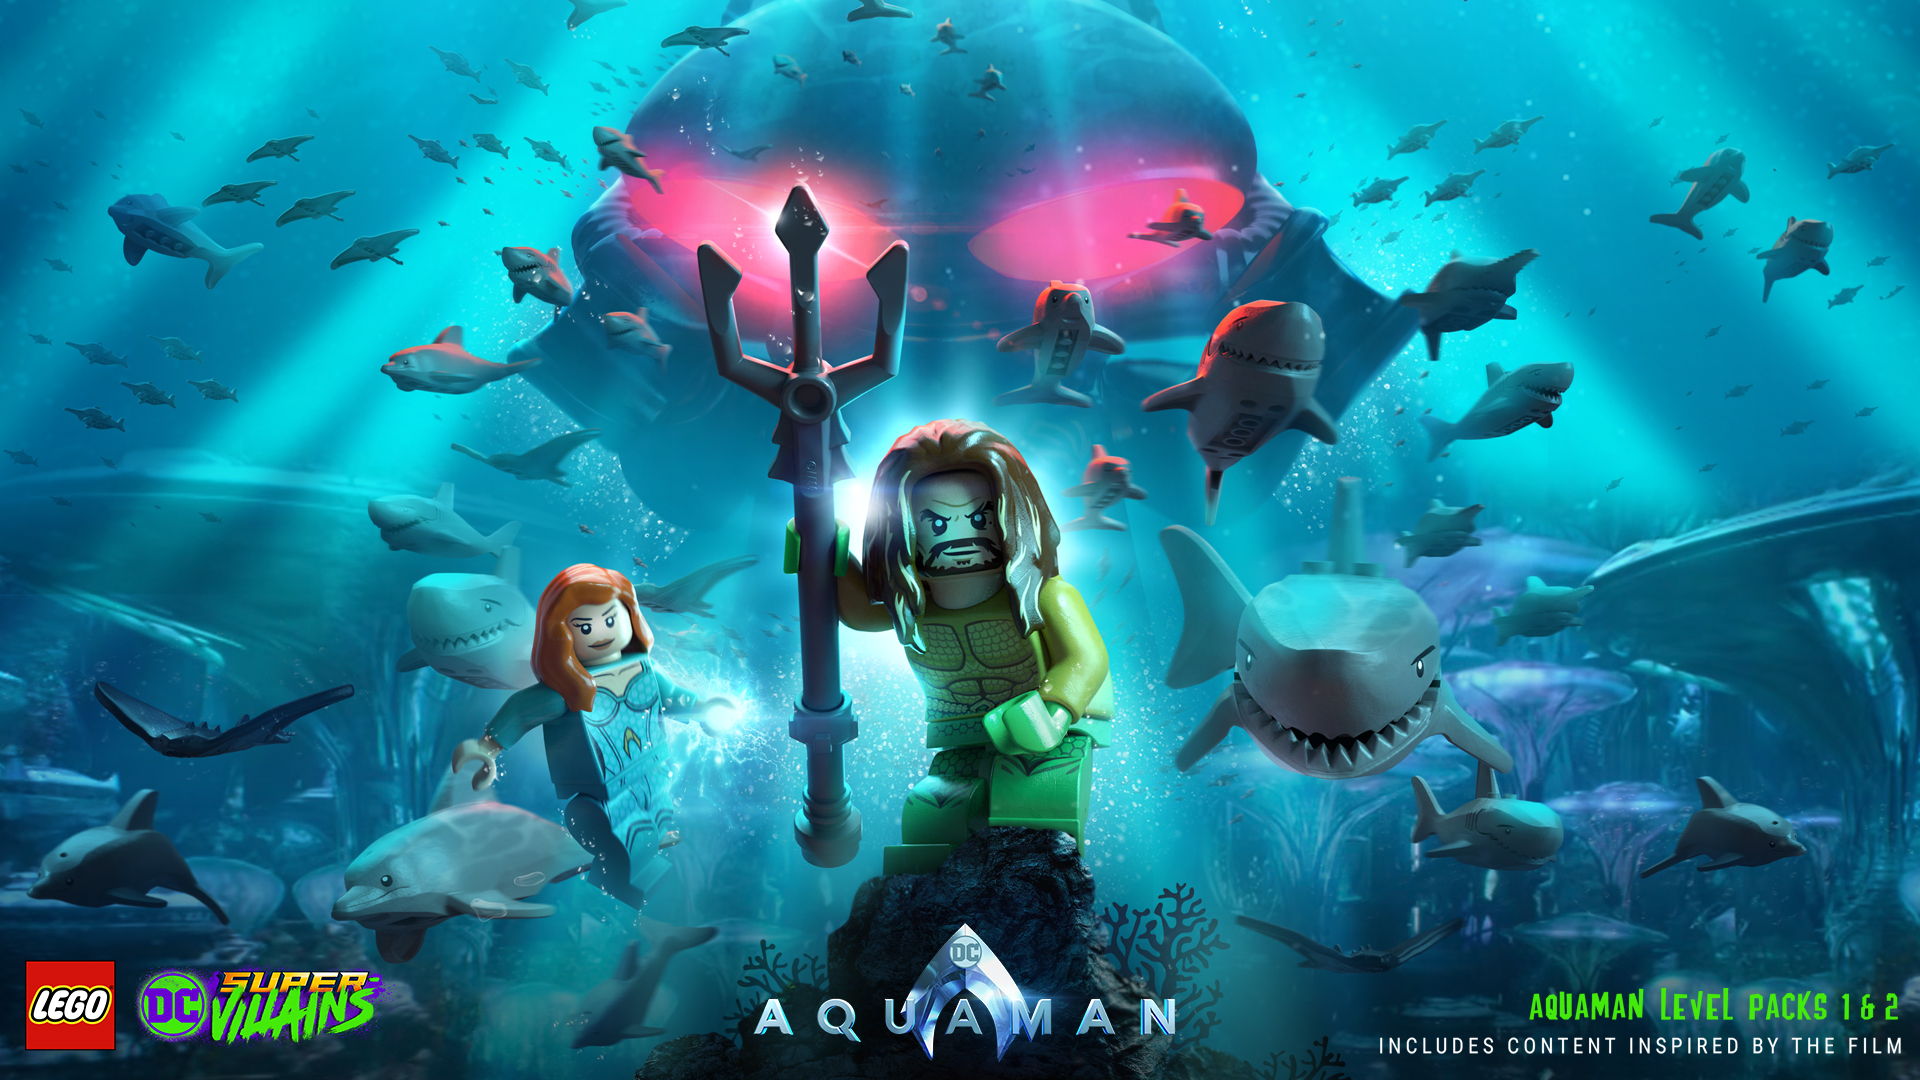 instal the last version for ipod Aquaman